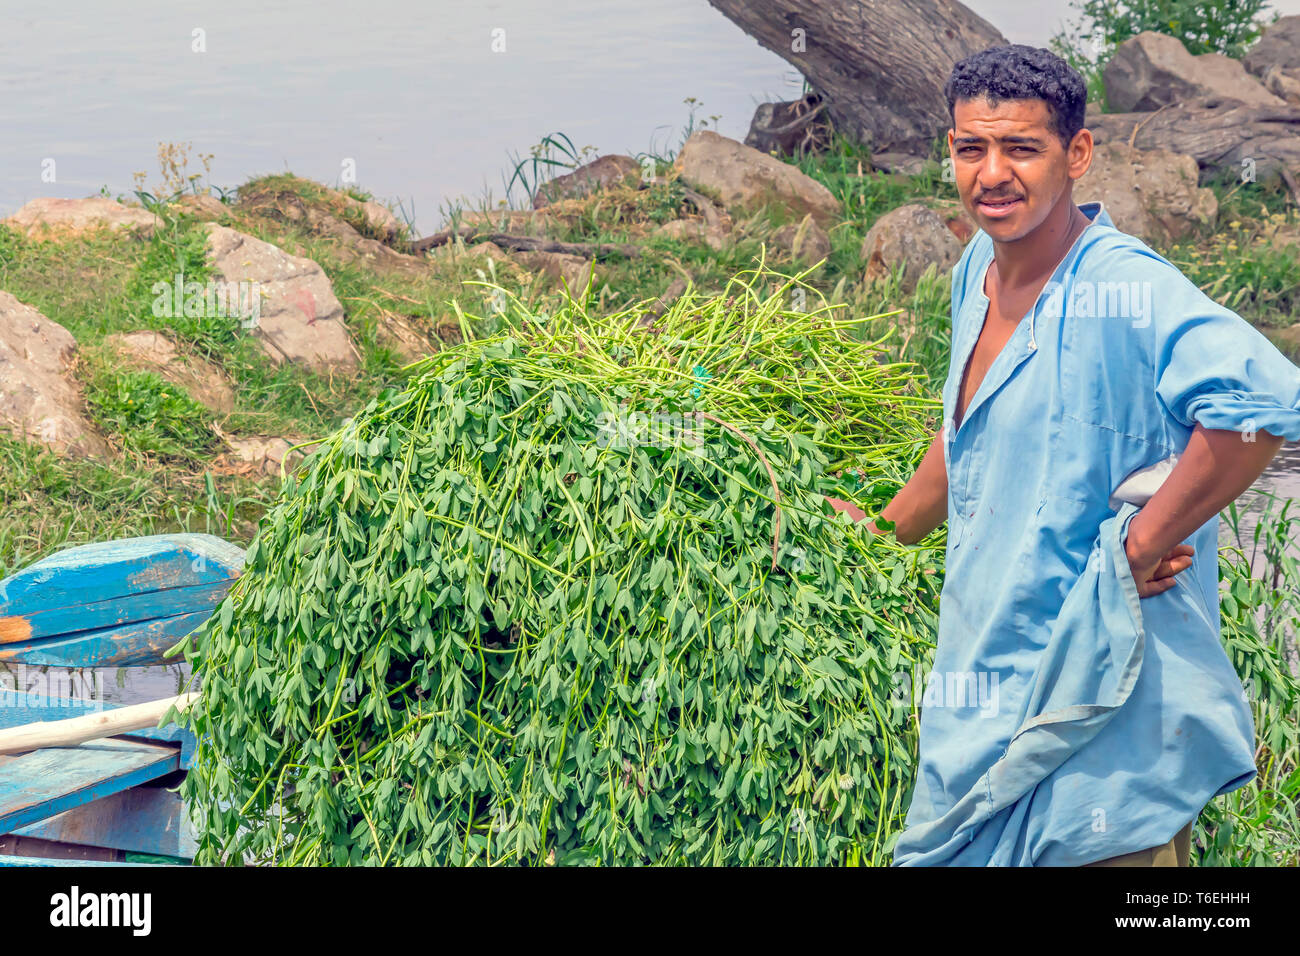 Egyptian man beside mound of freshly harvested feed clover Stock Photo